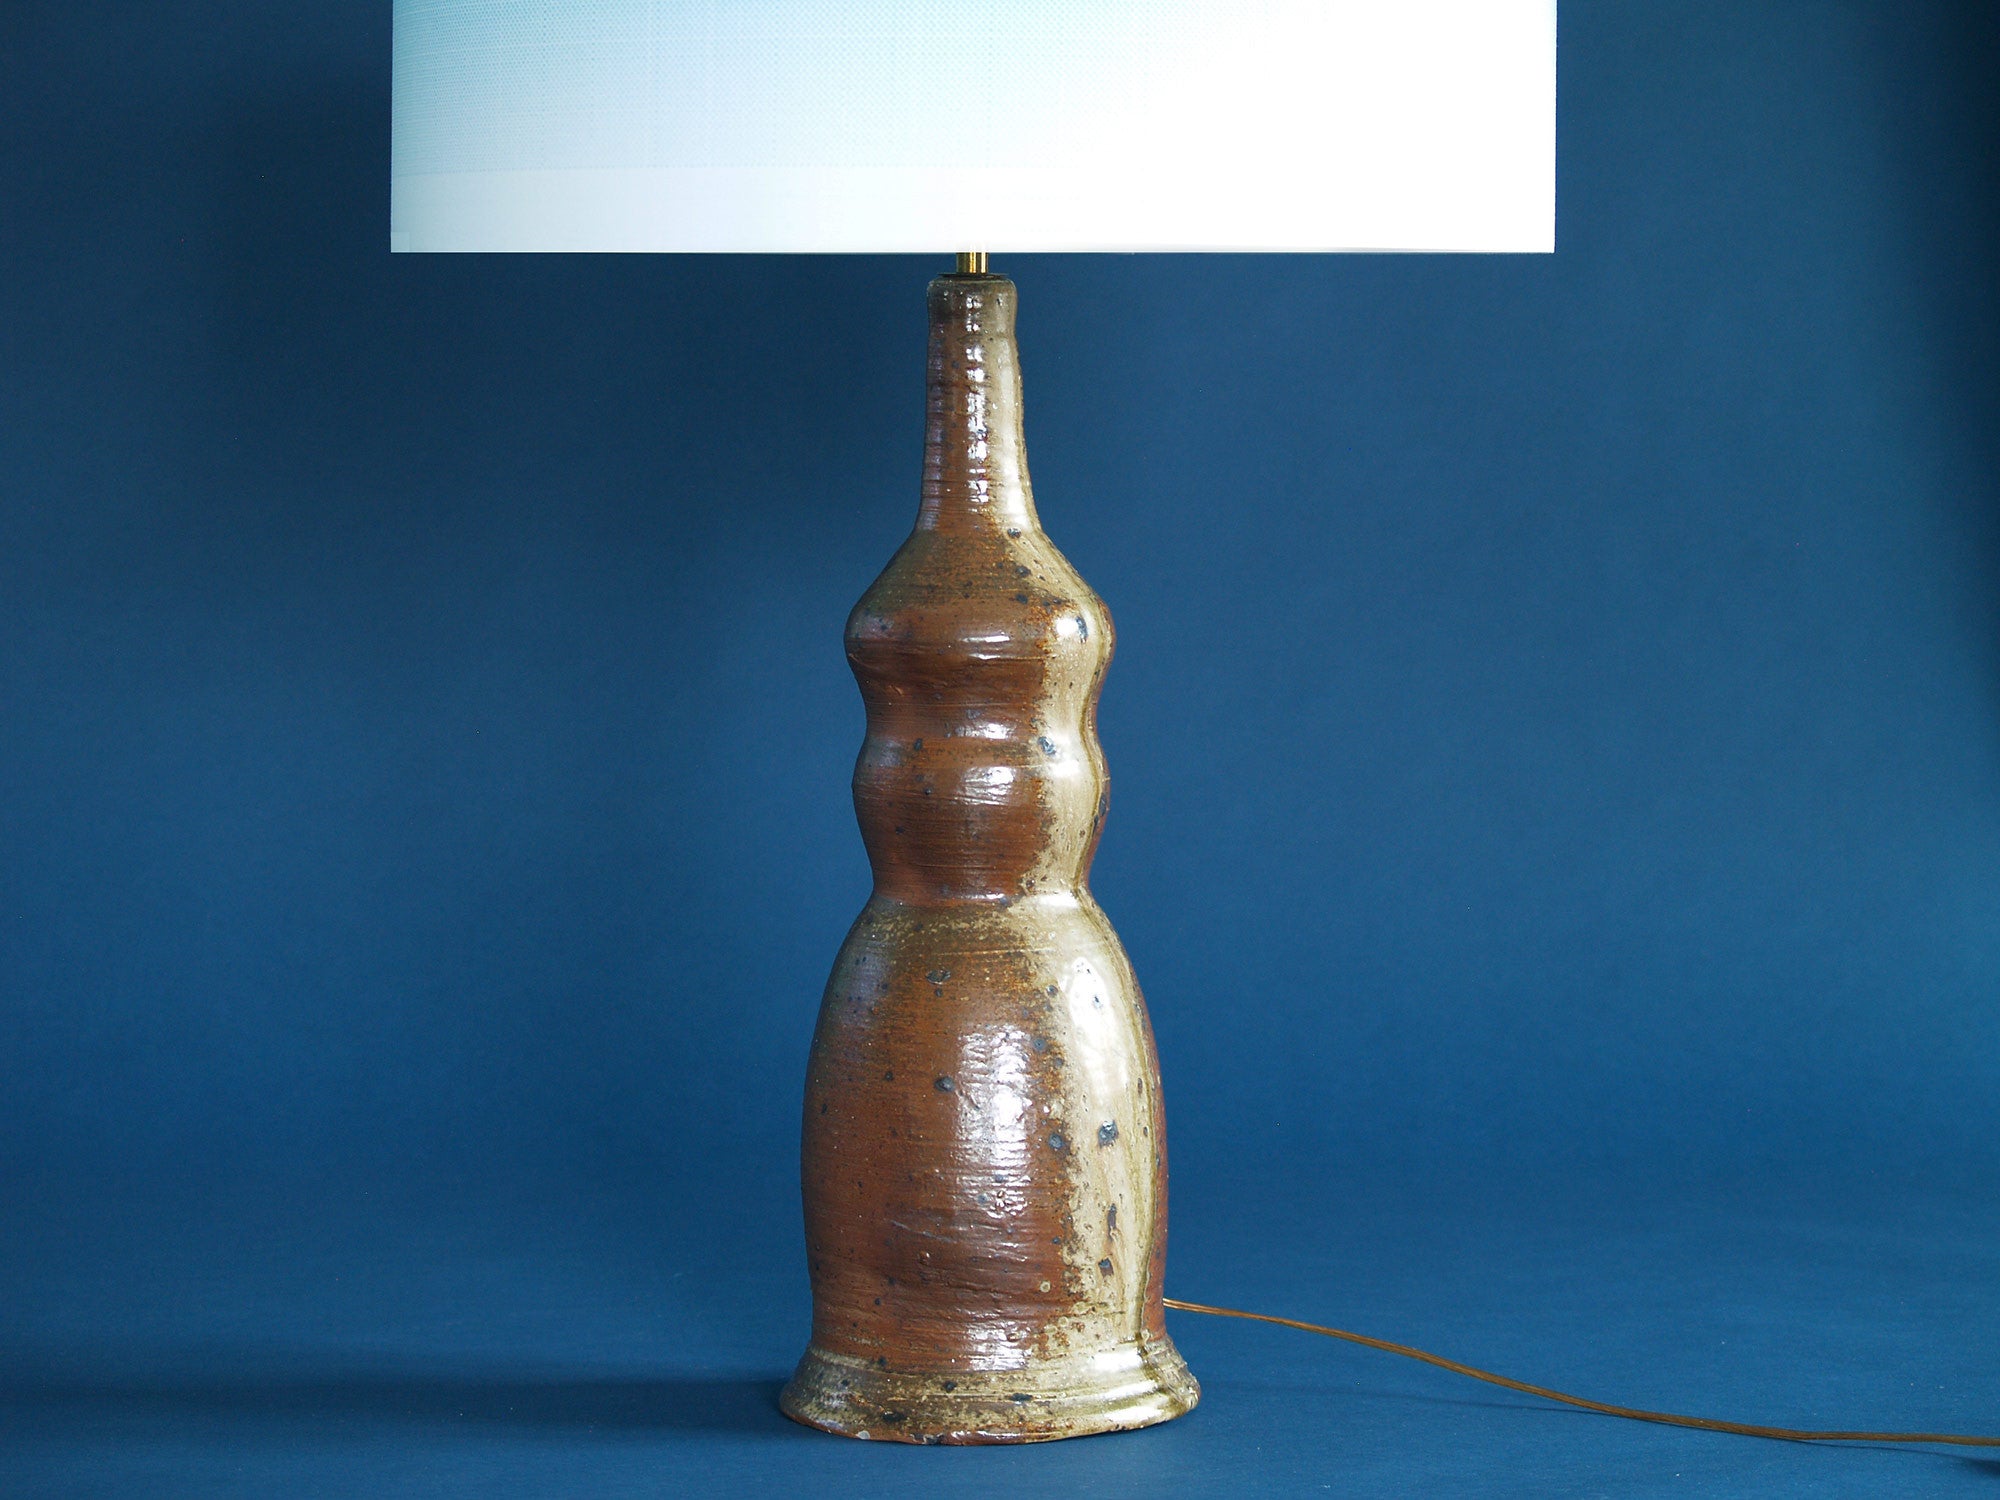 Lampe anthropomorphe en grès de La Borne, France (vers 1955)..Anthropomorphic stoneware lamp from La Borne, France (circa 1955)